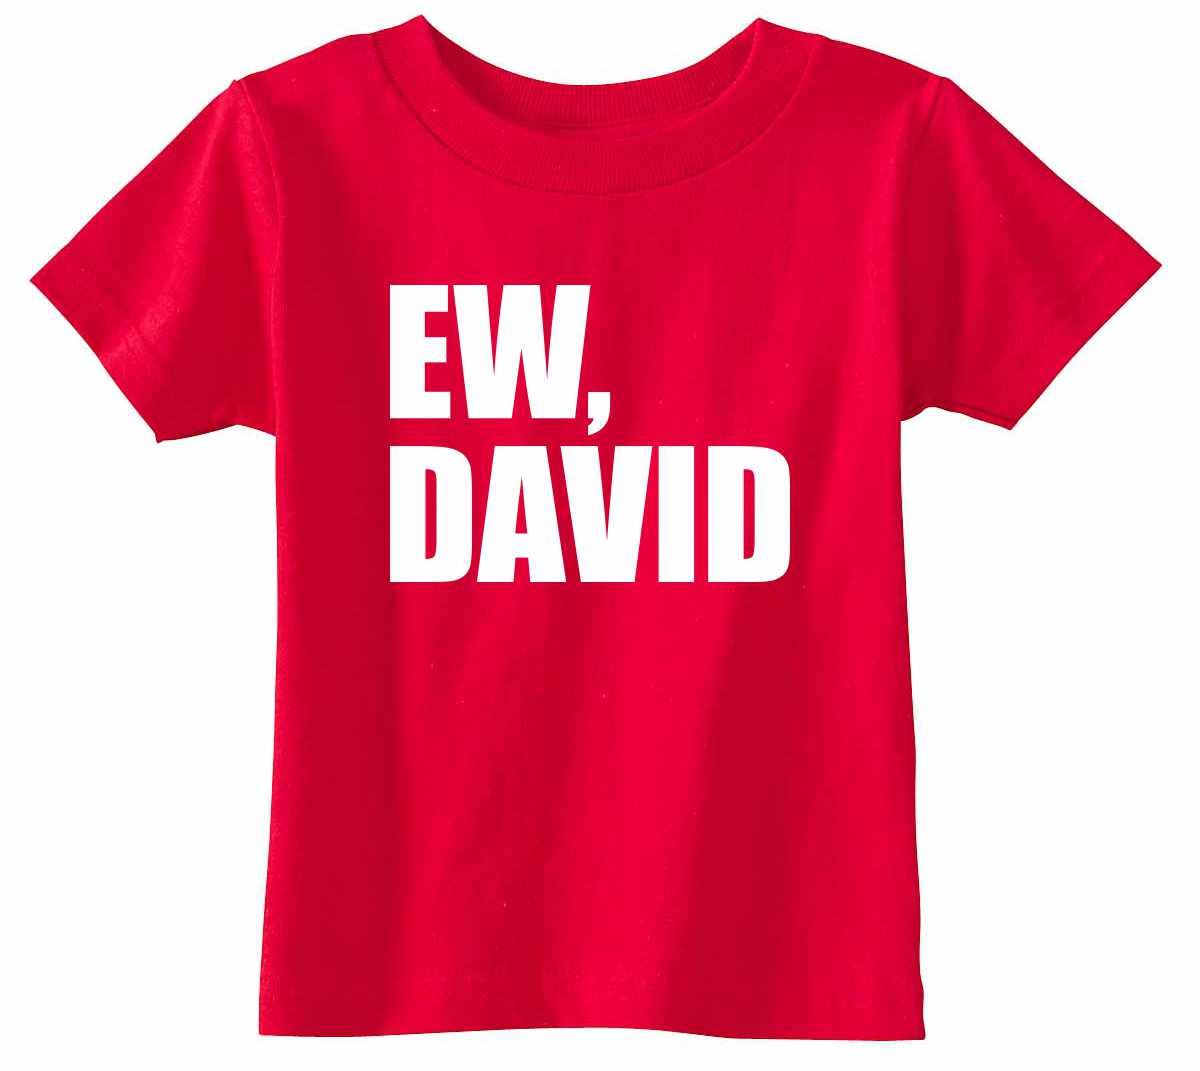 EW DAVID on Infant-Toddler T-Shirt